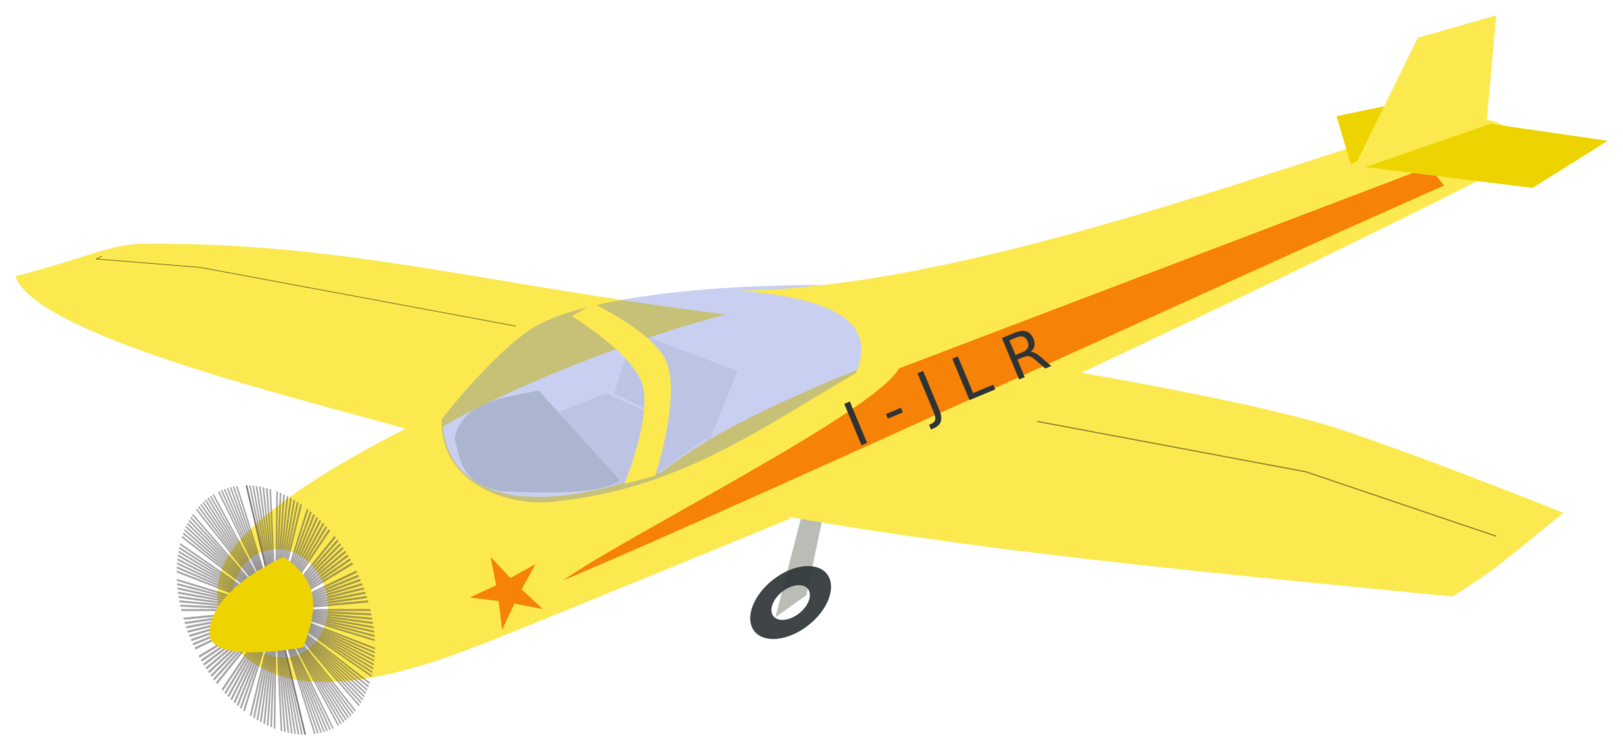 Propeller Driven Aircraft,Monoplane,Angle